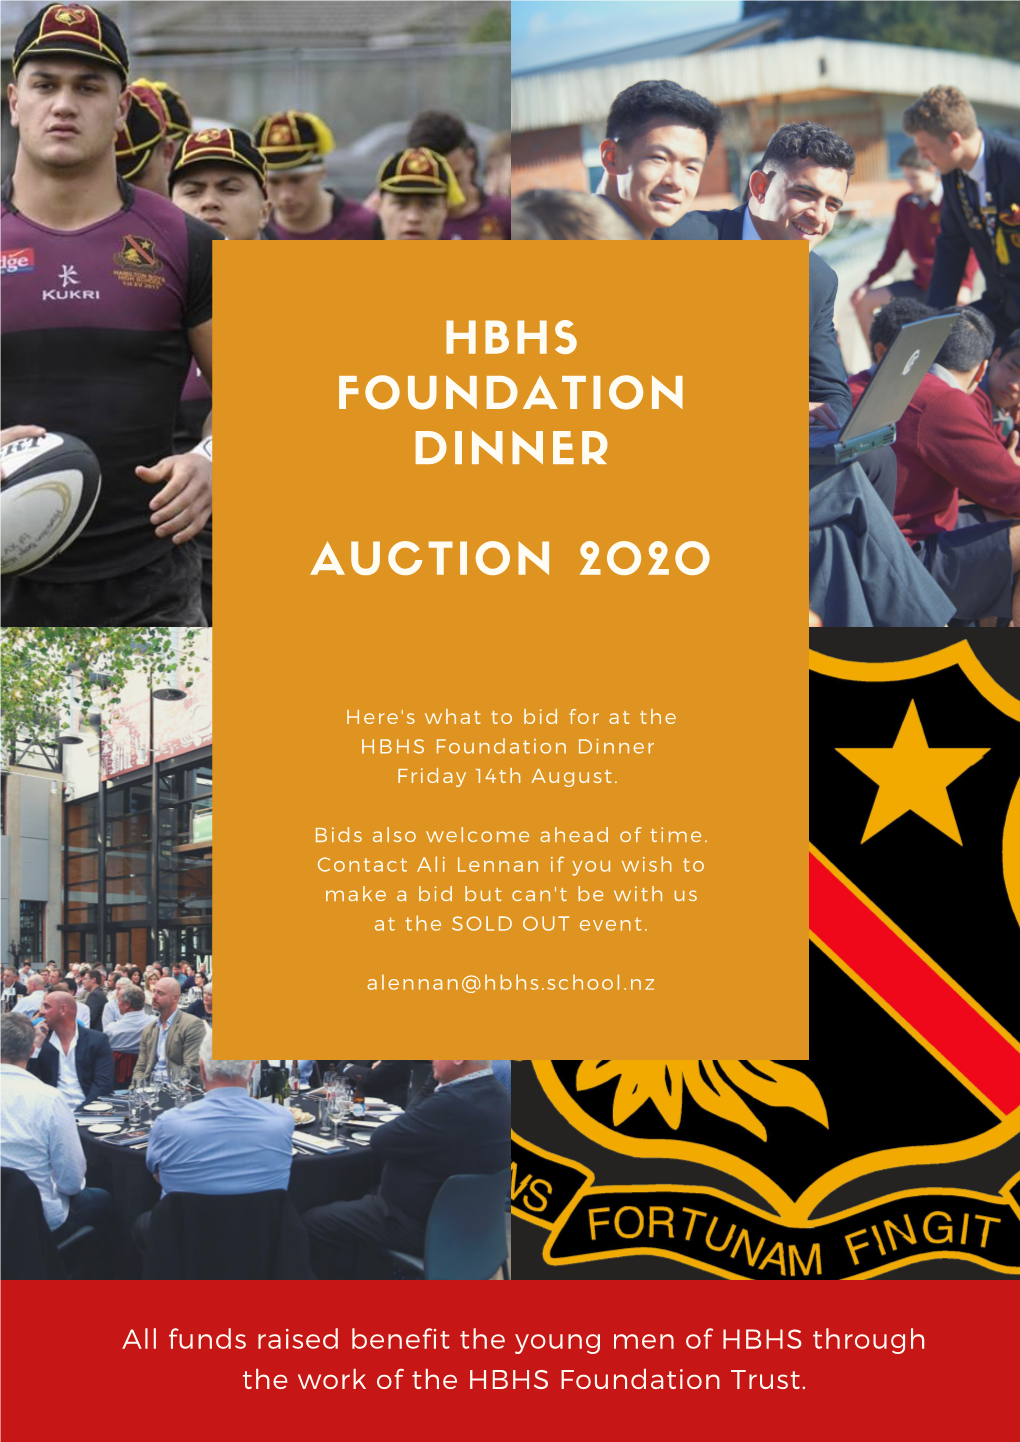 HBHS Foundation Dinner Auction 2020